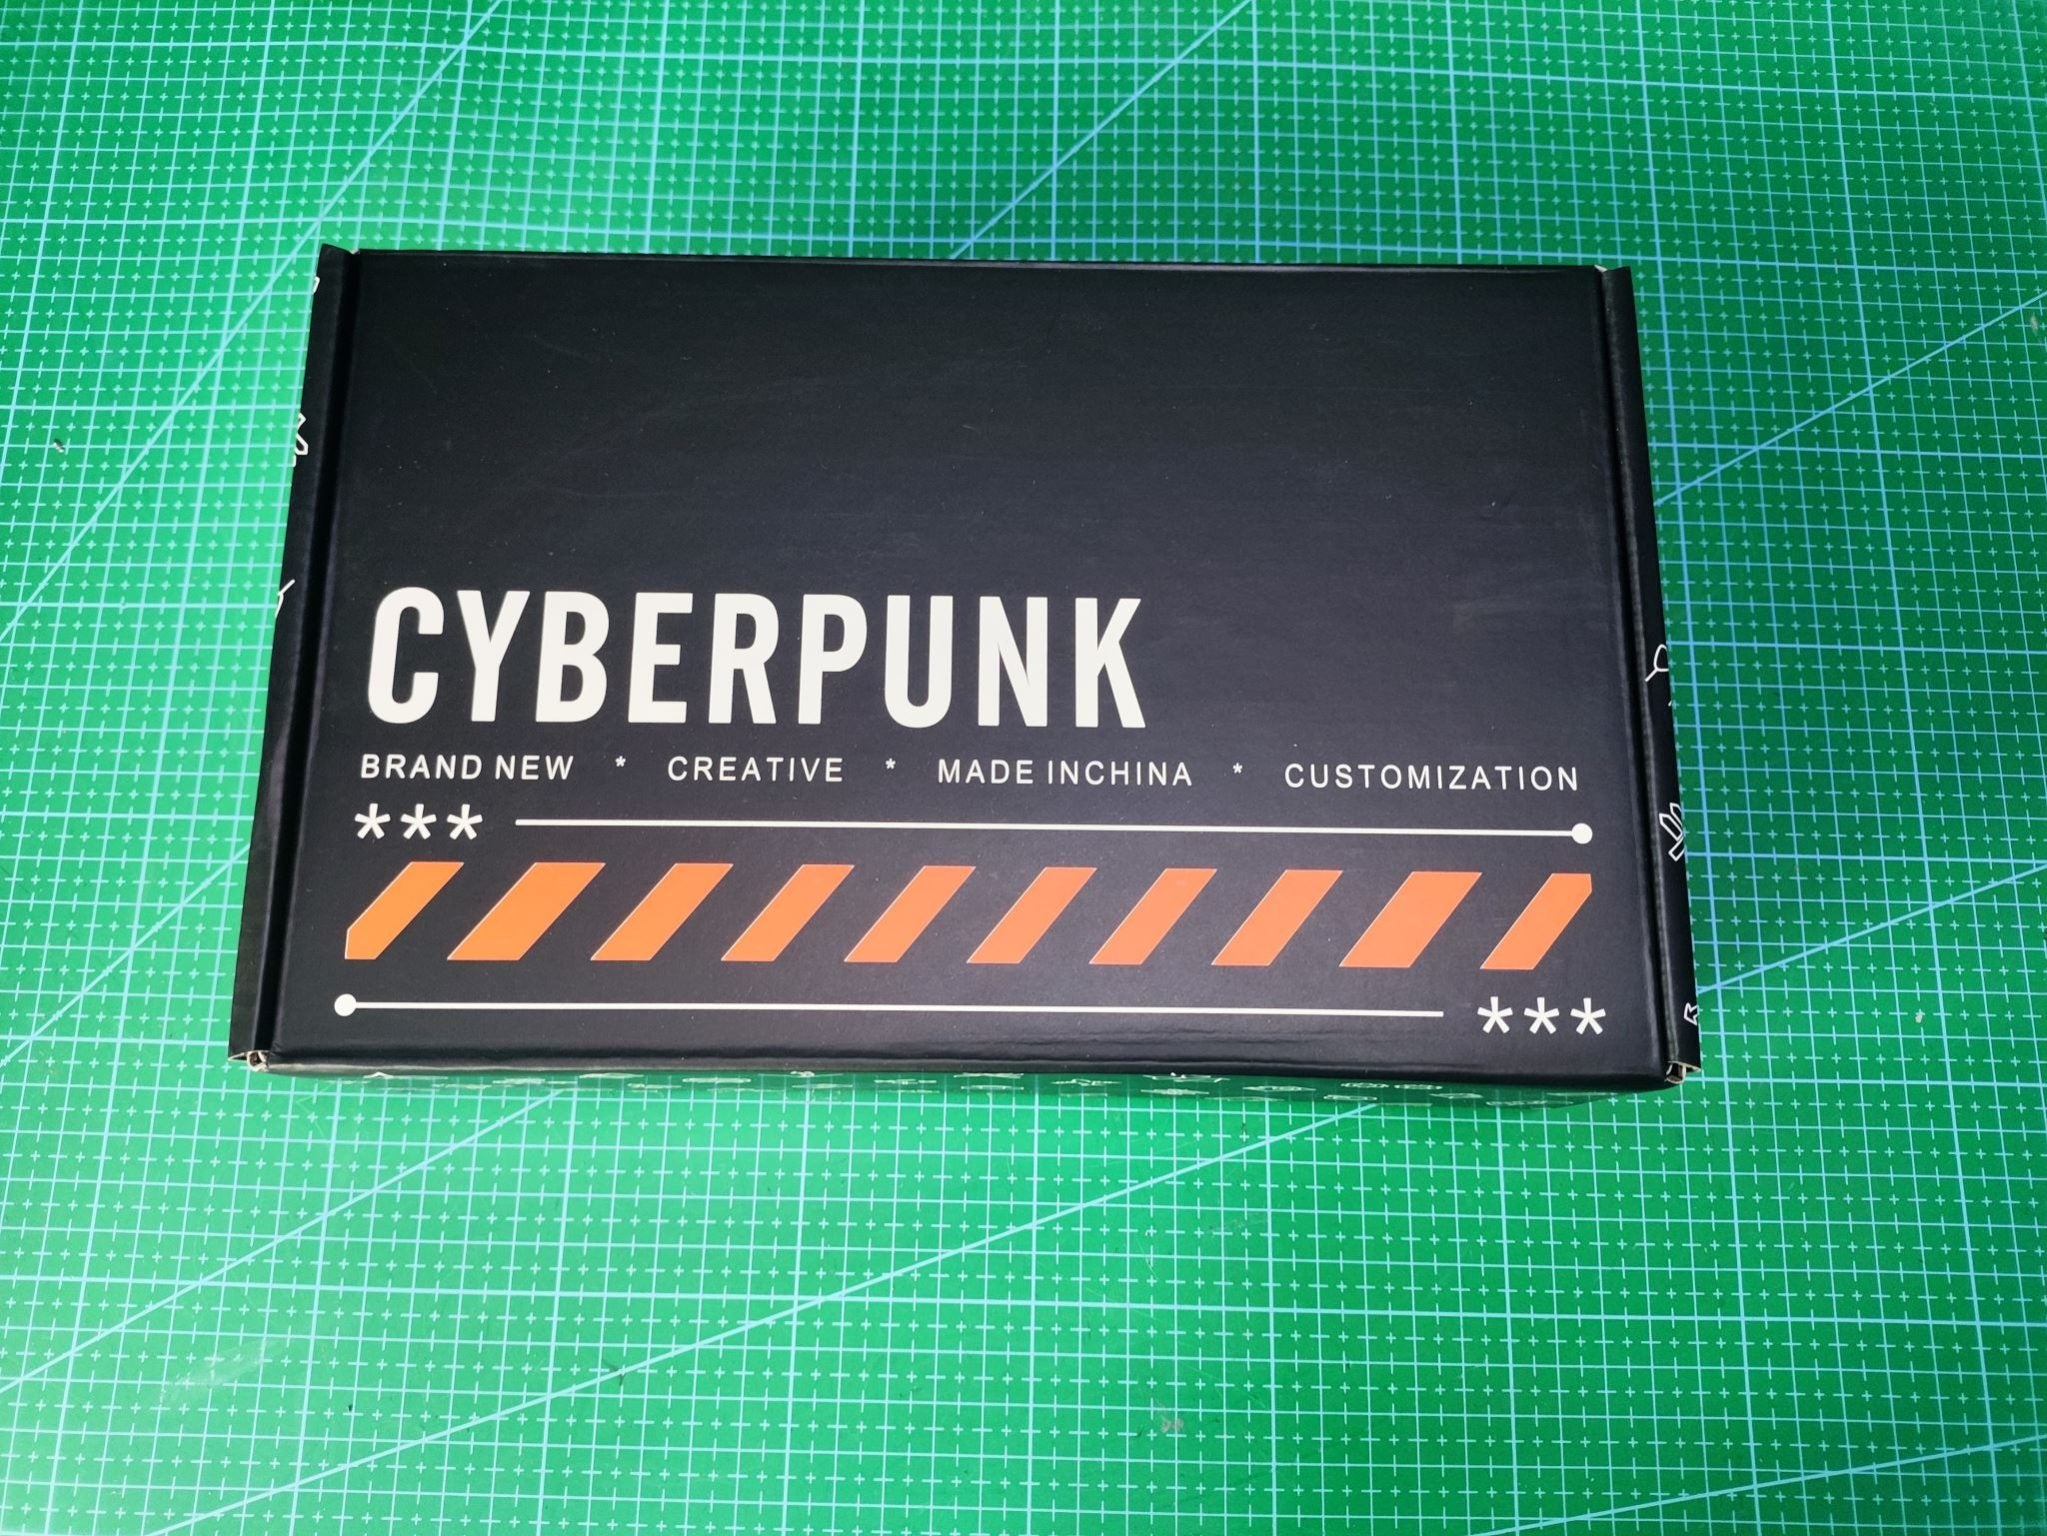 Cyberpunk Type-C USB Power Hub